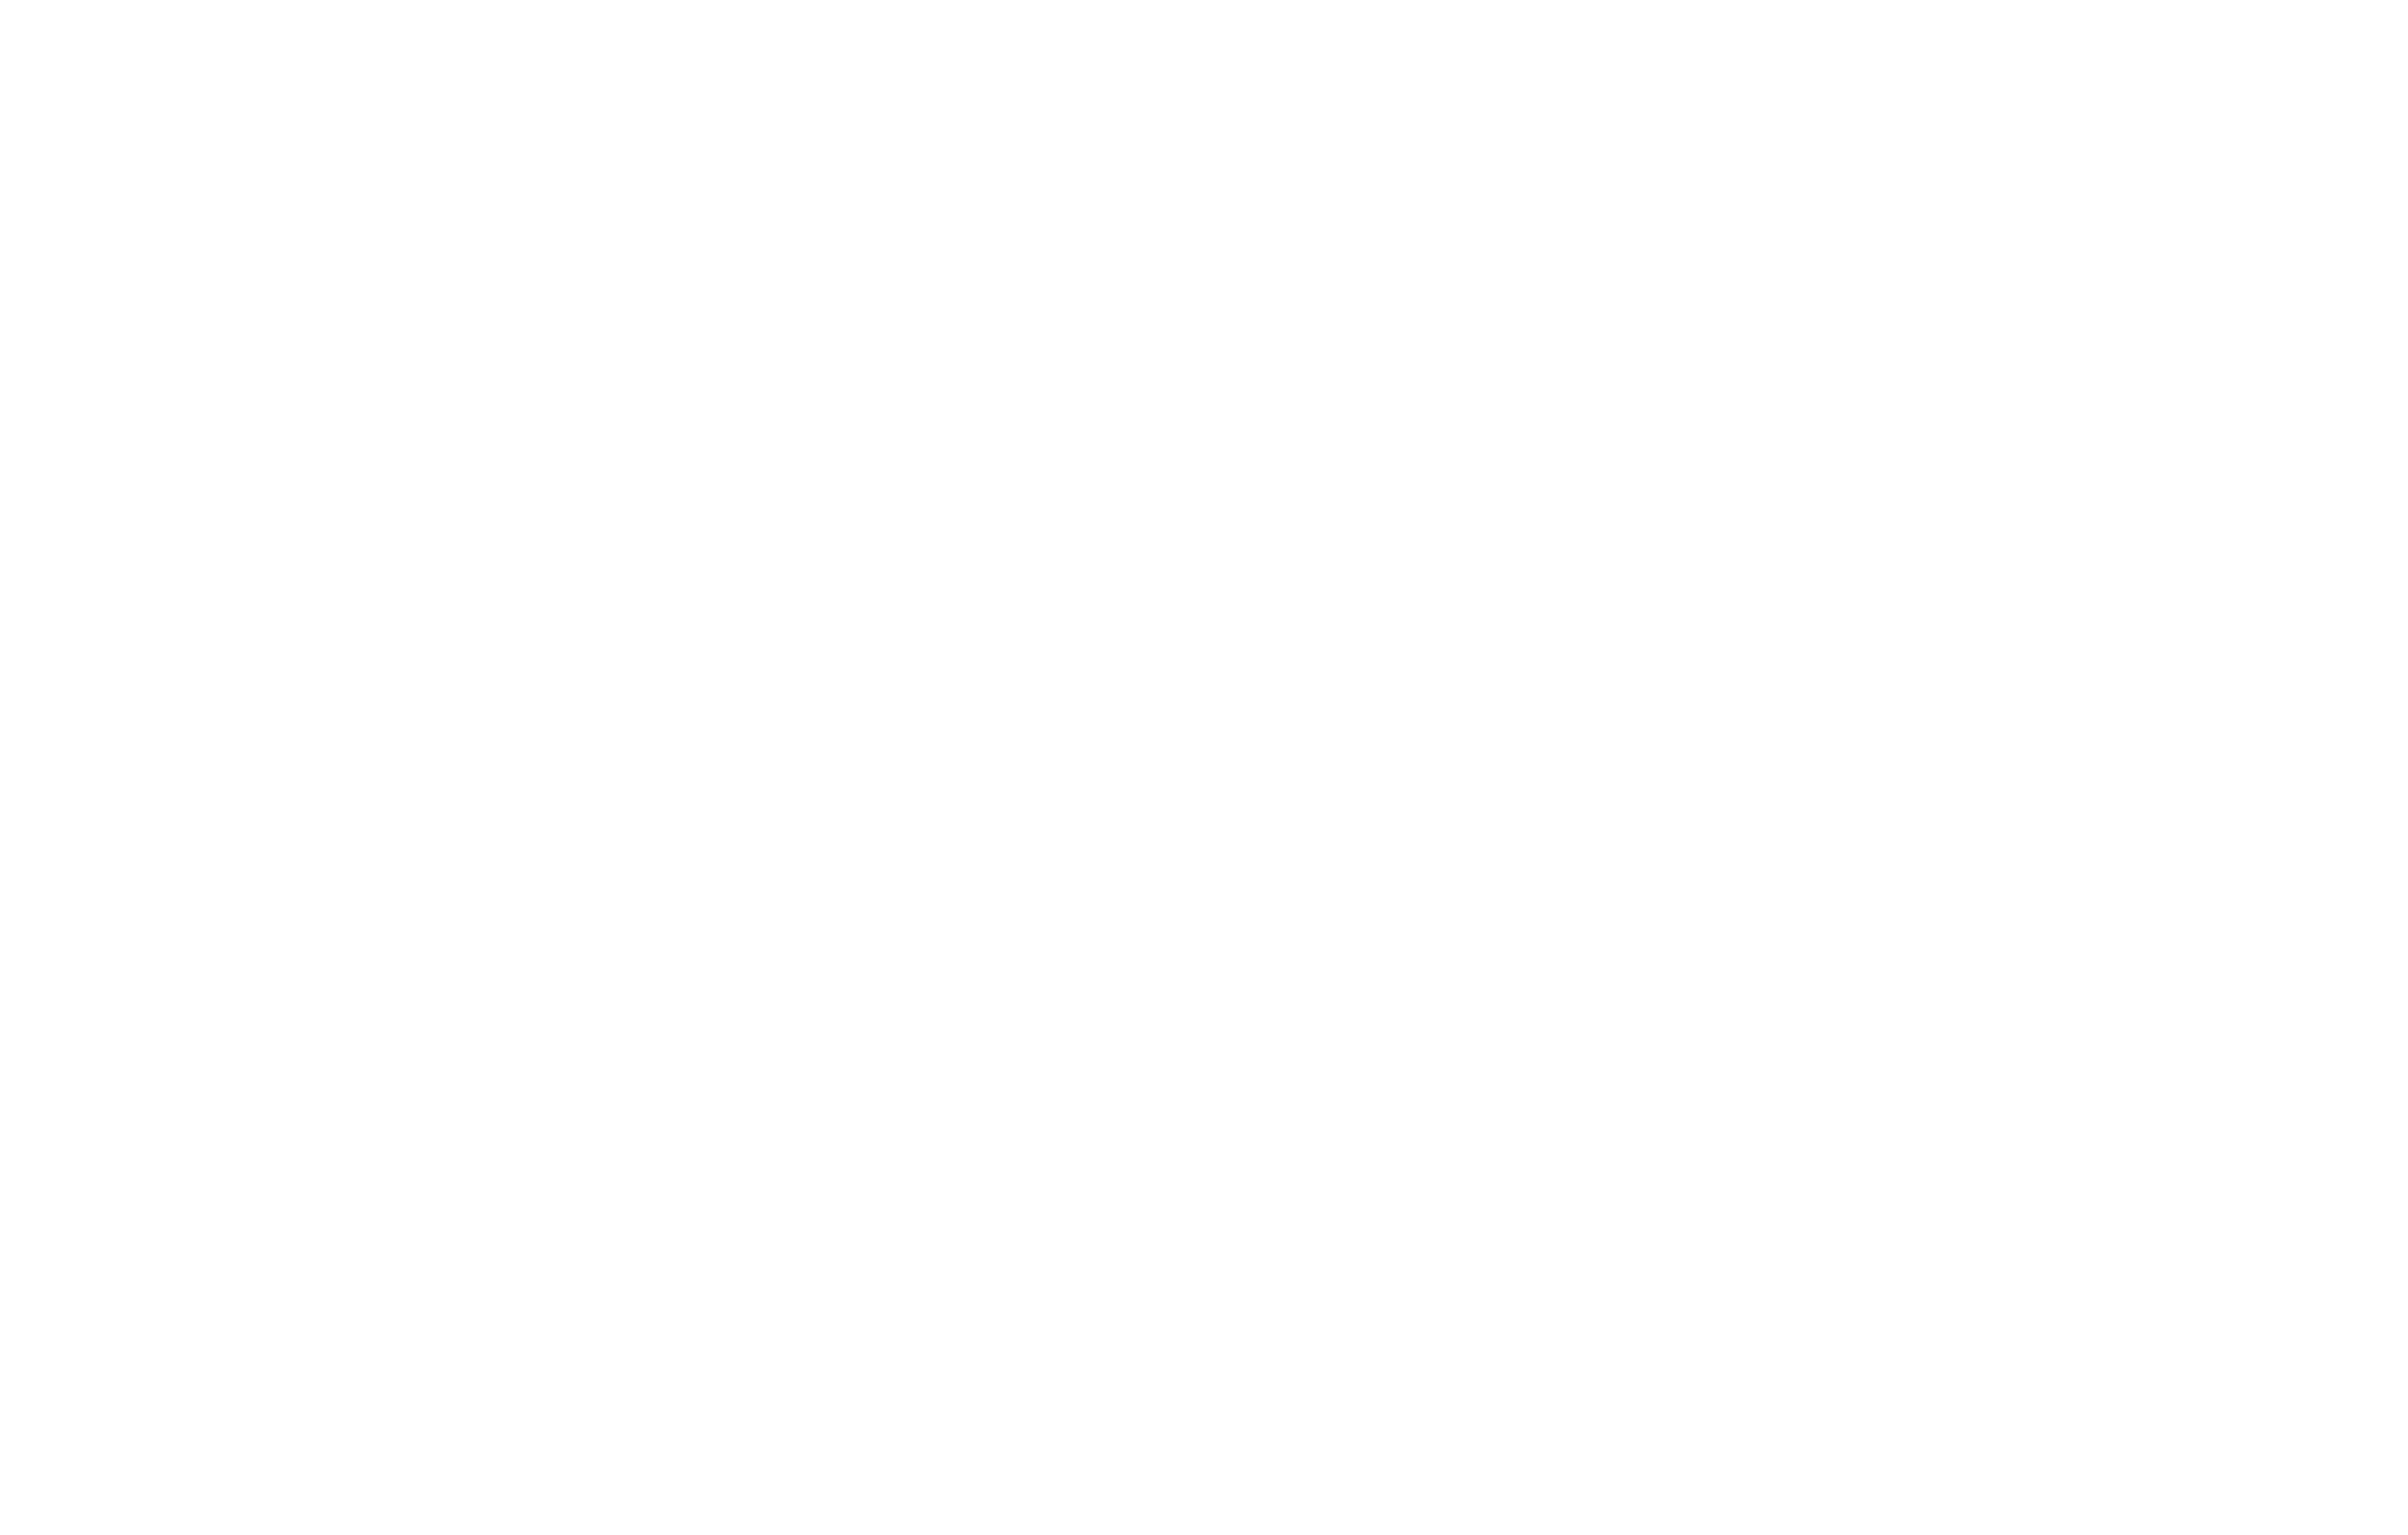 Comiti logo white